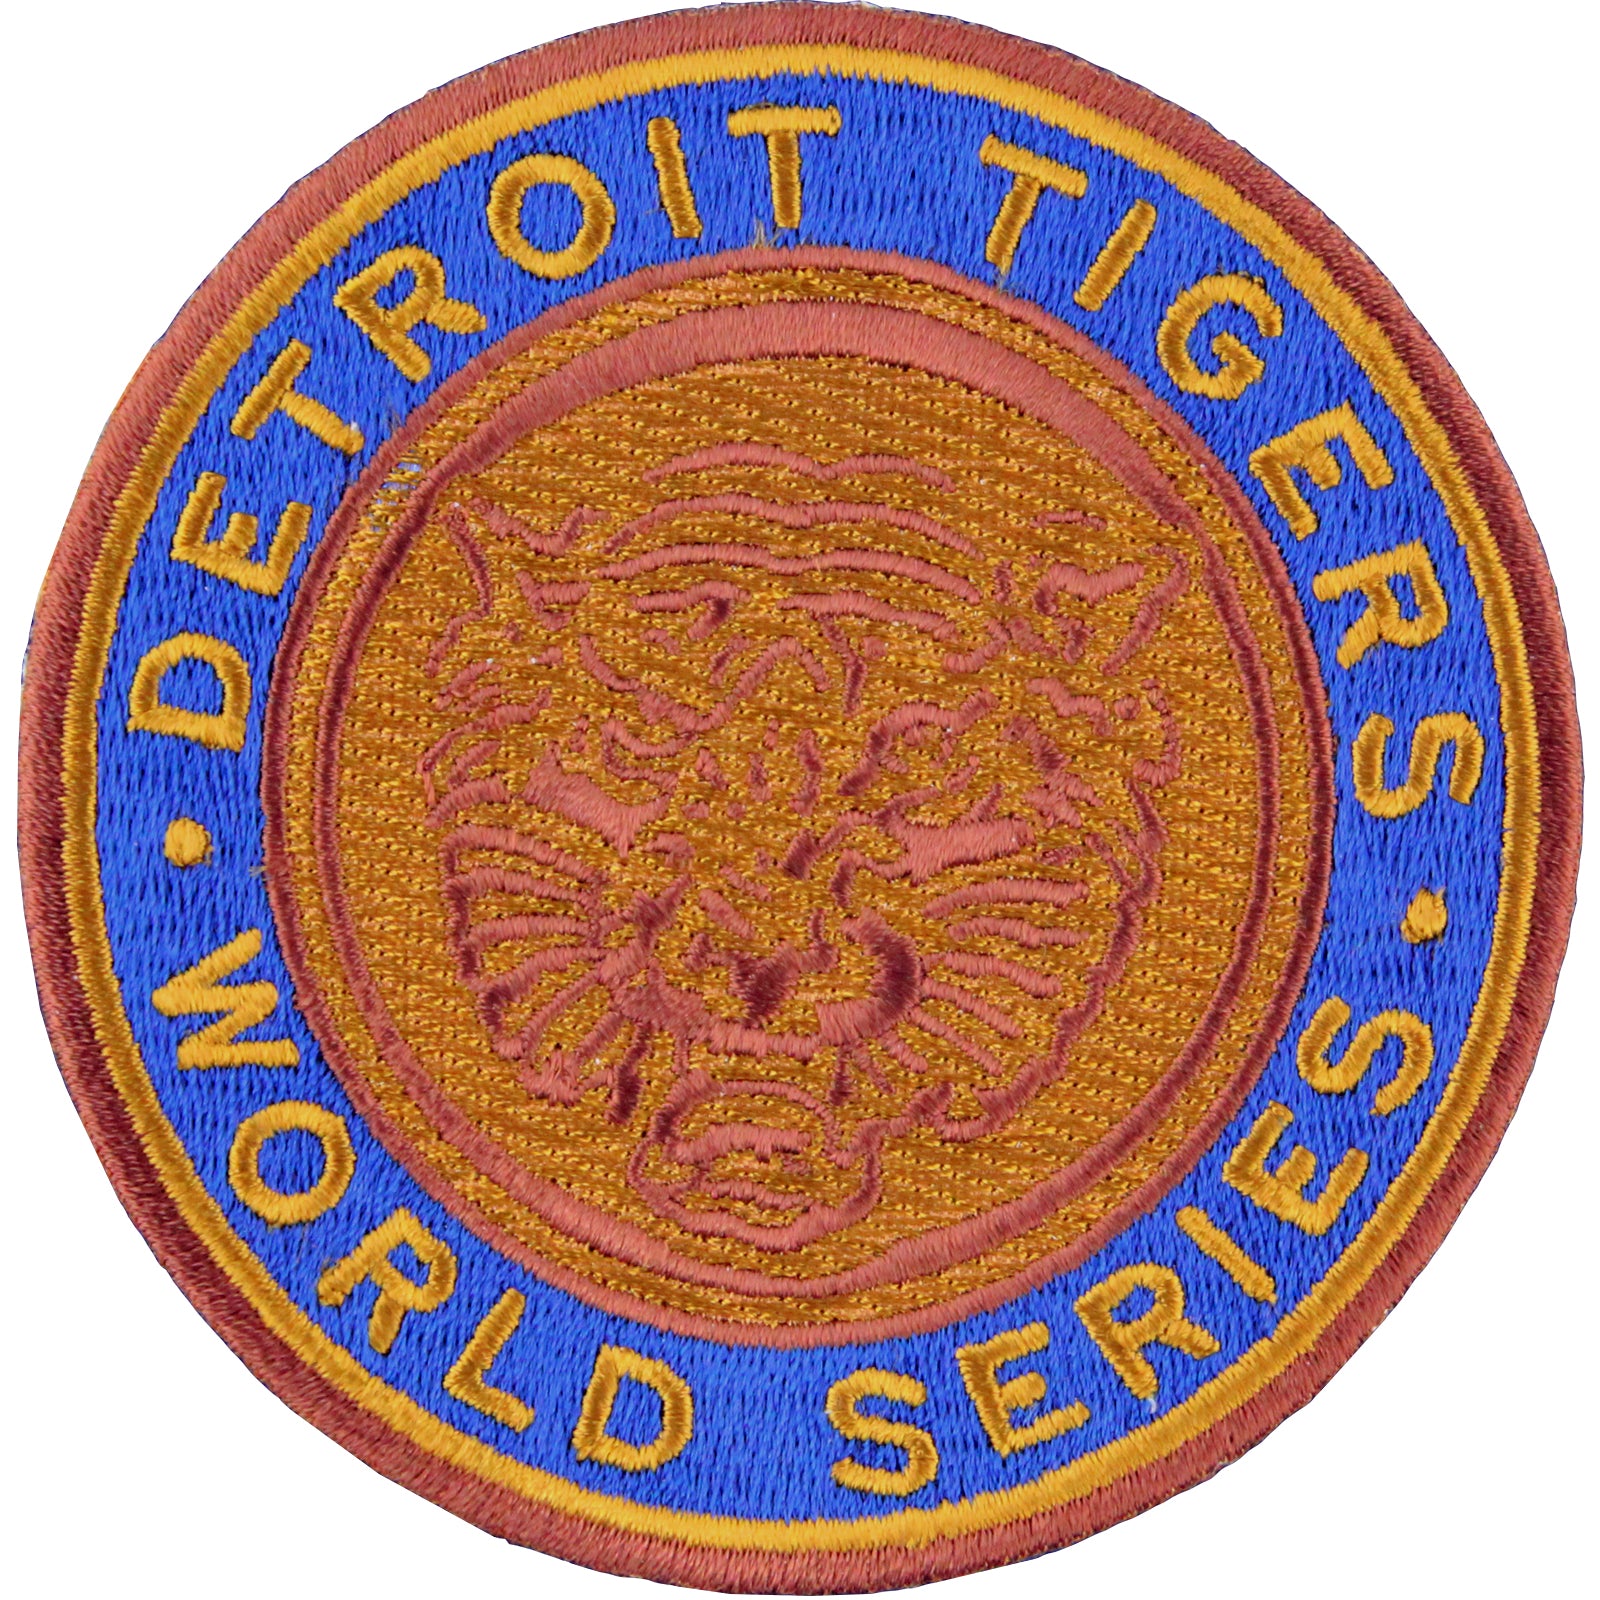 Detroit Tigers 1968 World Series Champions Commemorative Patch